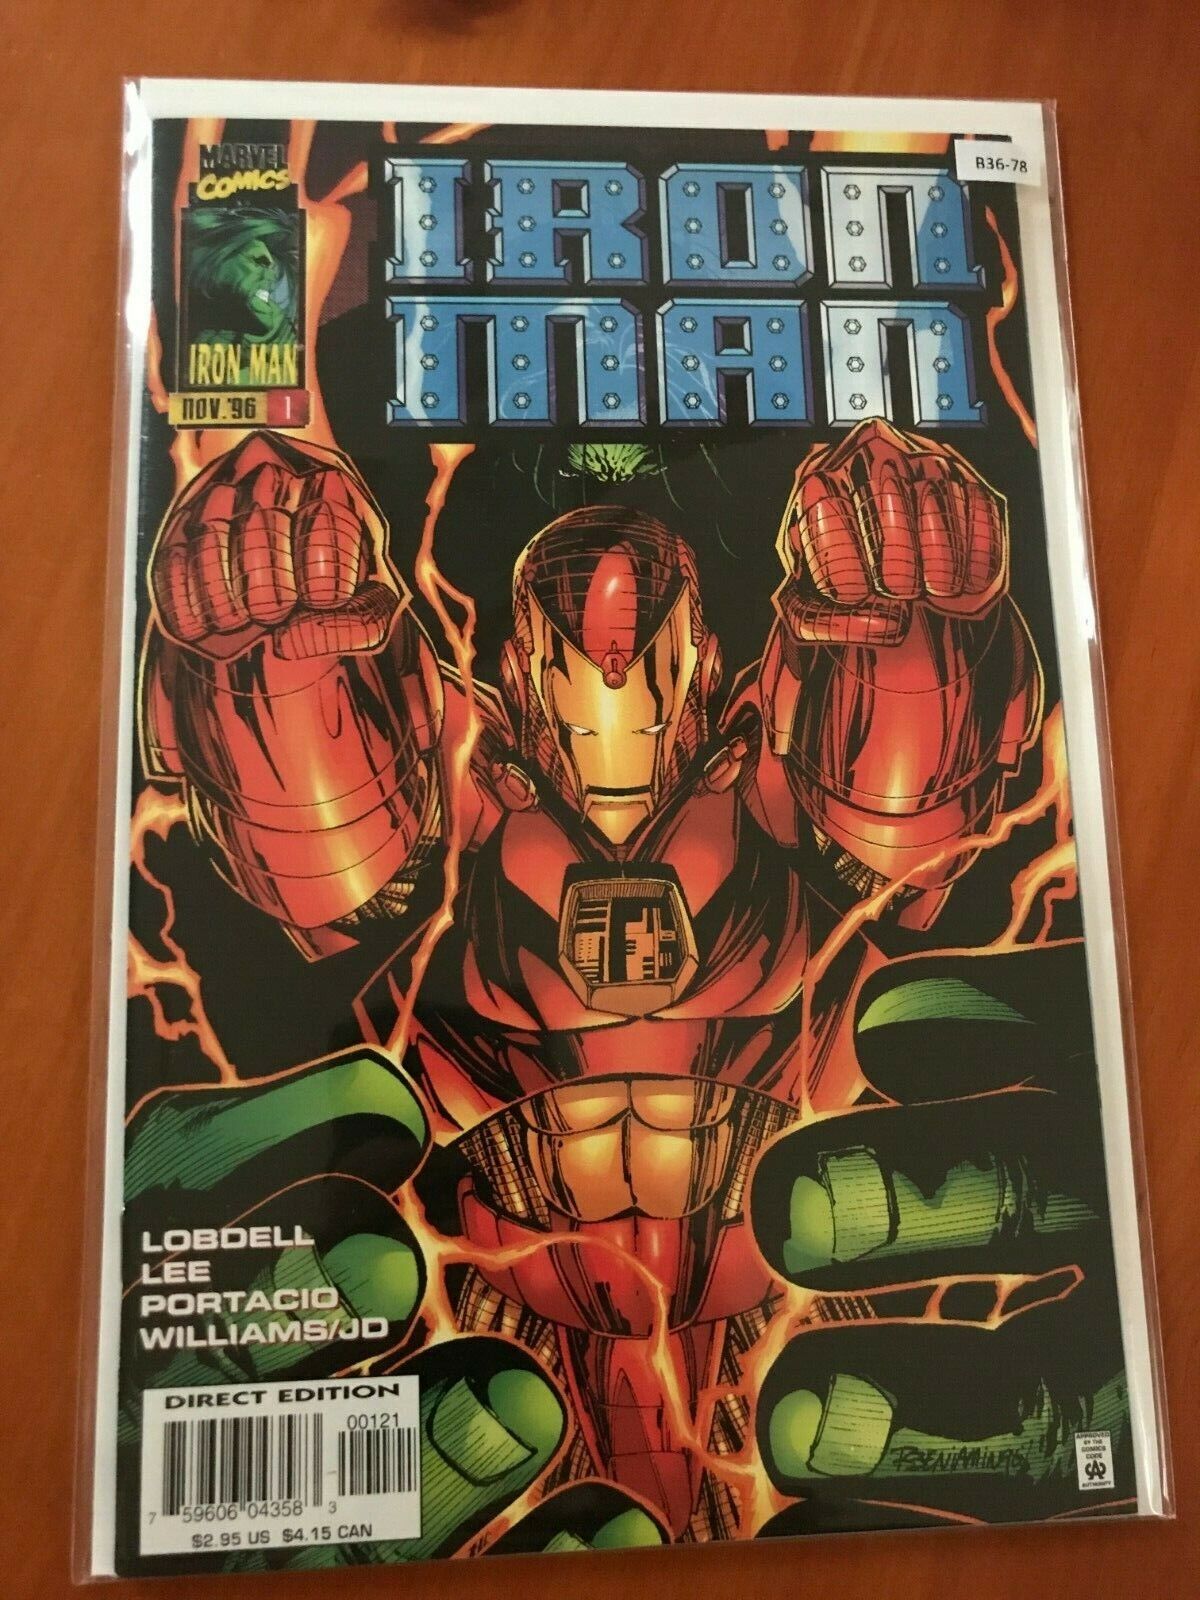 Iron Man vol.2 #1 1996 Variant Cover High Grade 9.0 Marvel Comic Book B36-78